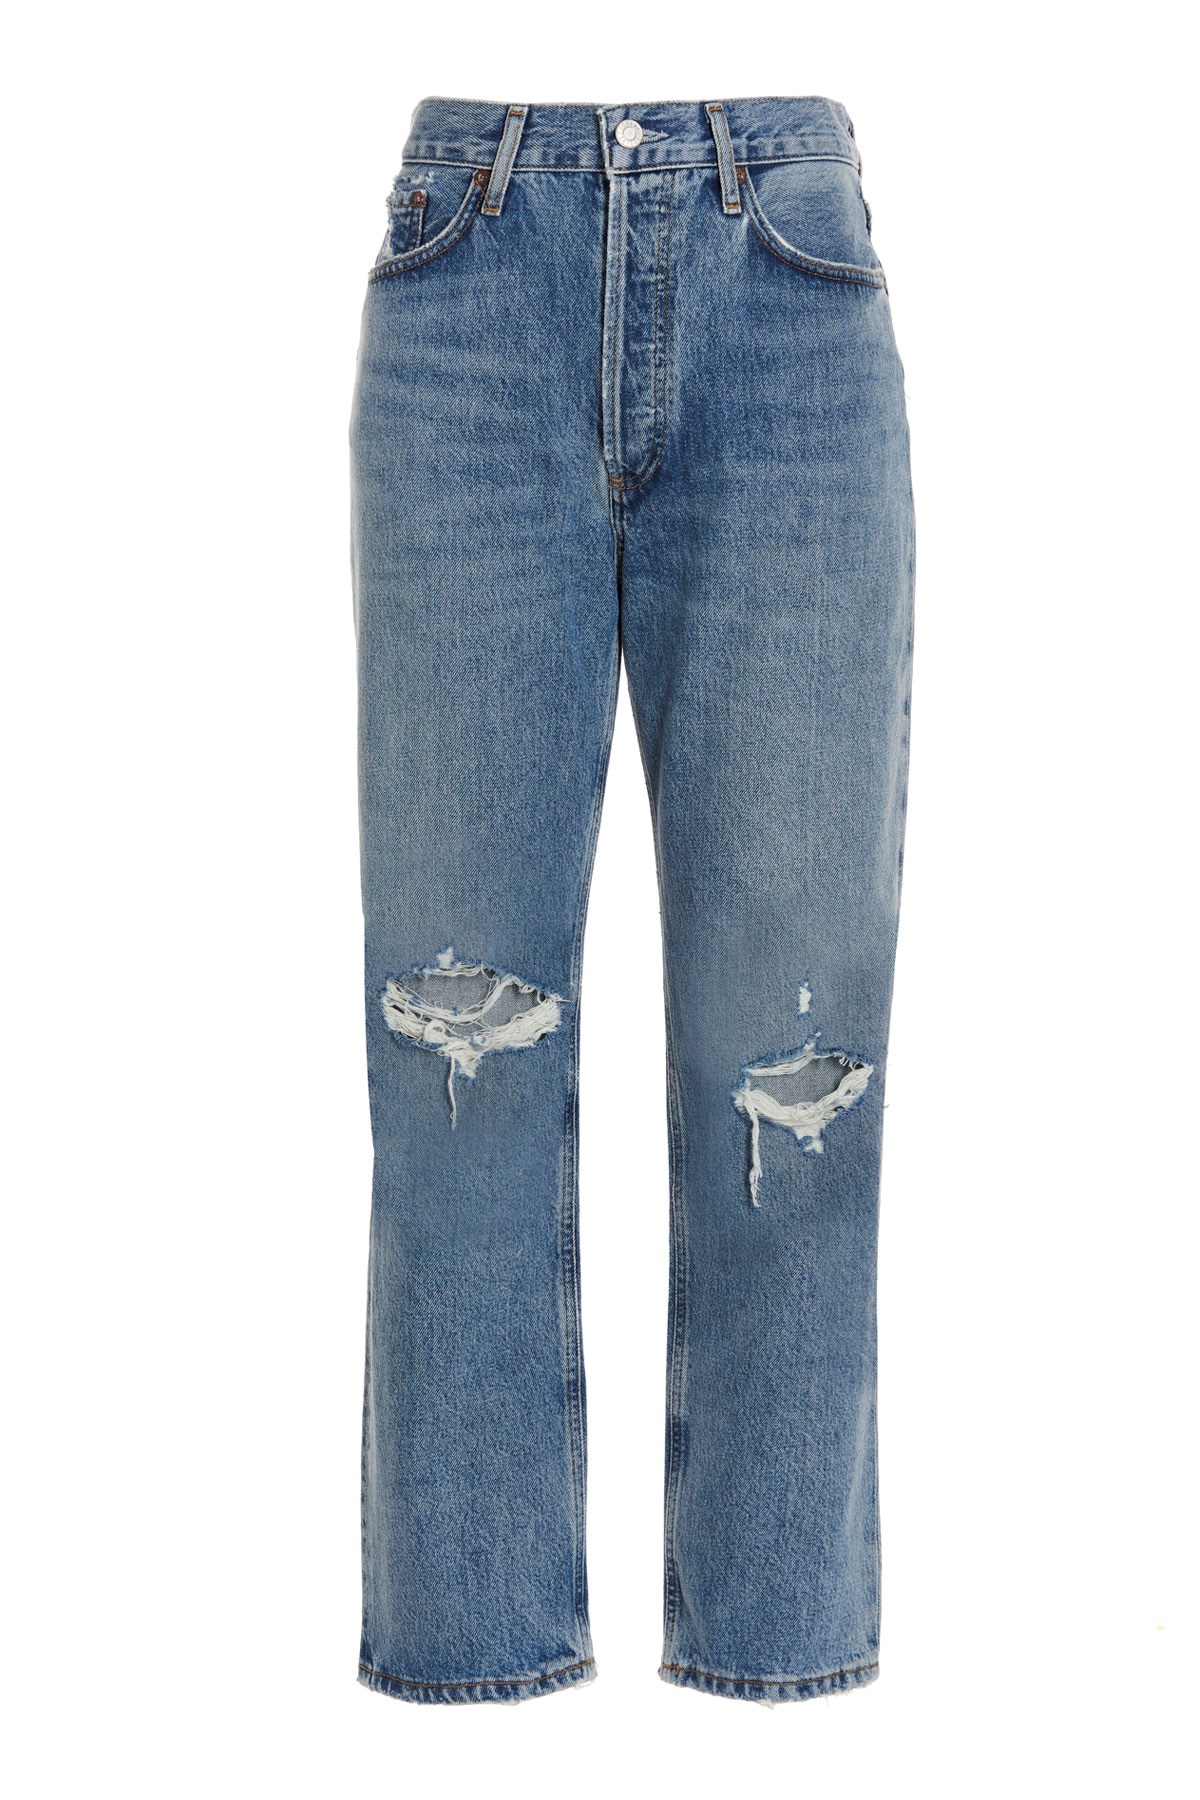 AGOLDE ‘Lana Crop' Jeans